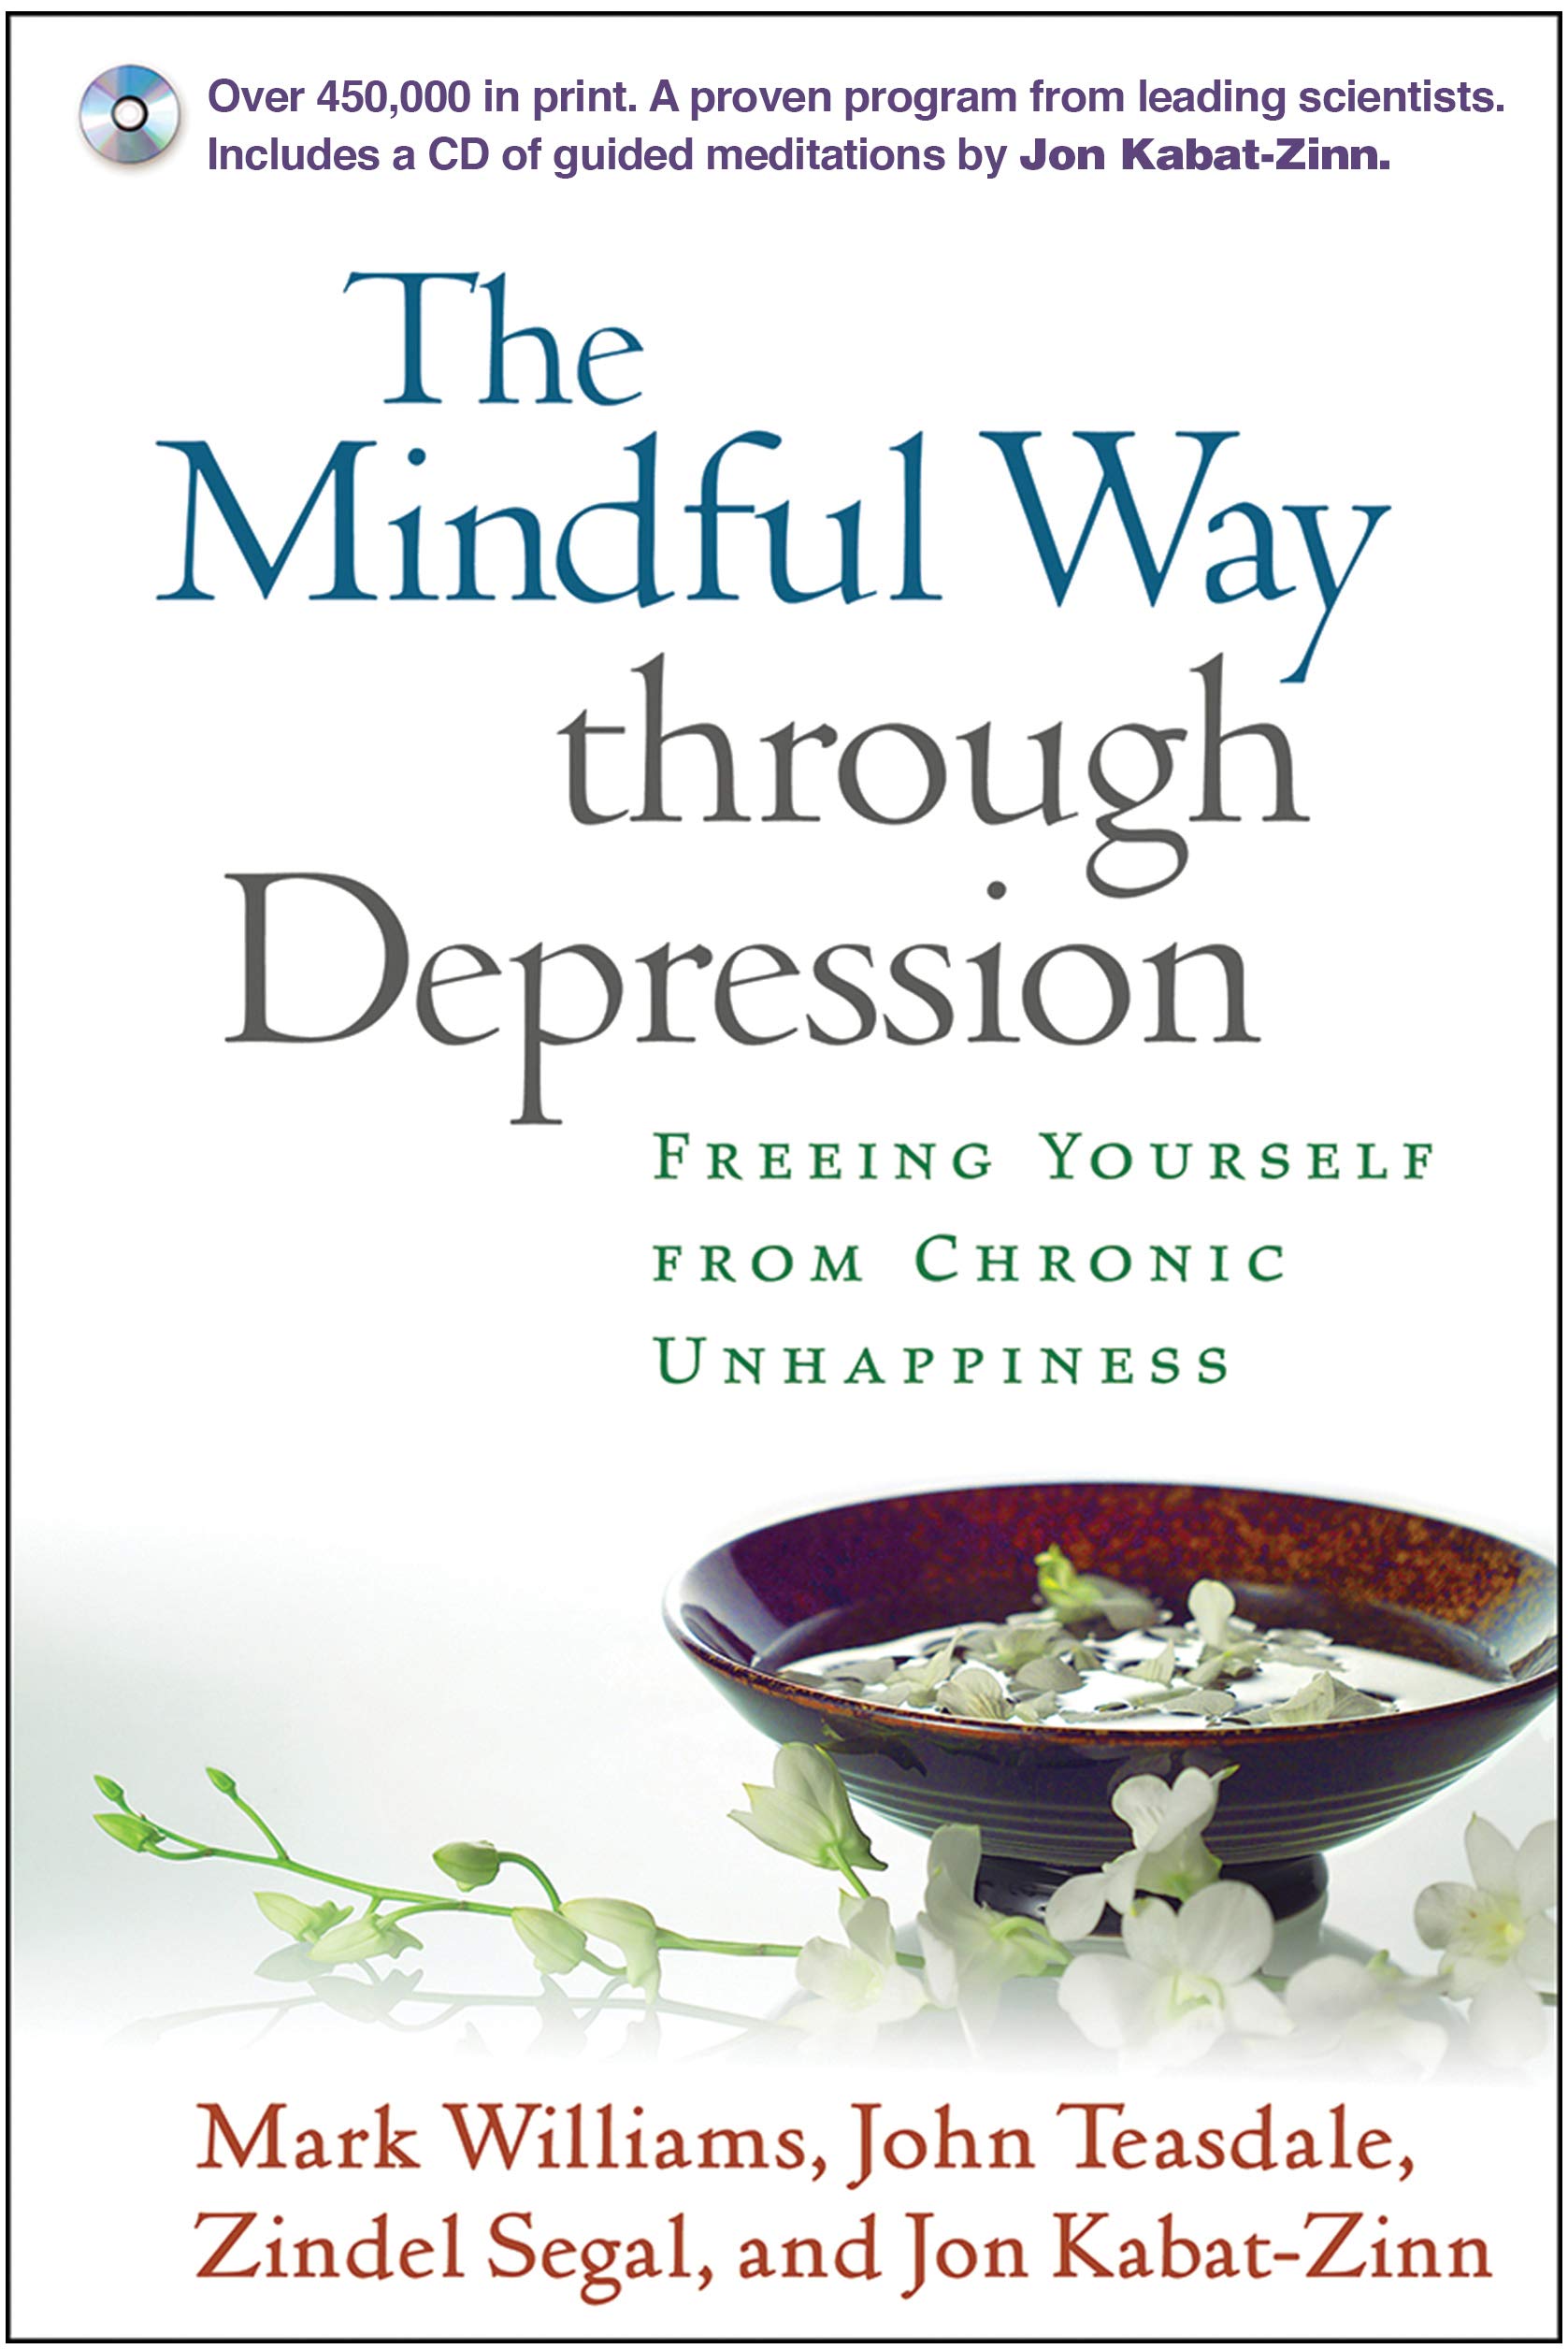 The Mindful Way through Depression by Mark Williams, John Teasdale, Zindel Segal & Jon Kabat-Zinn